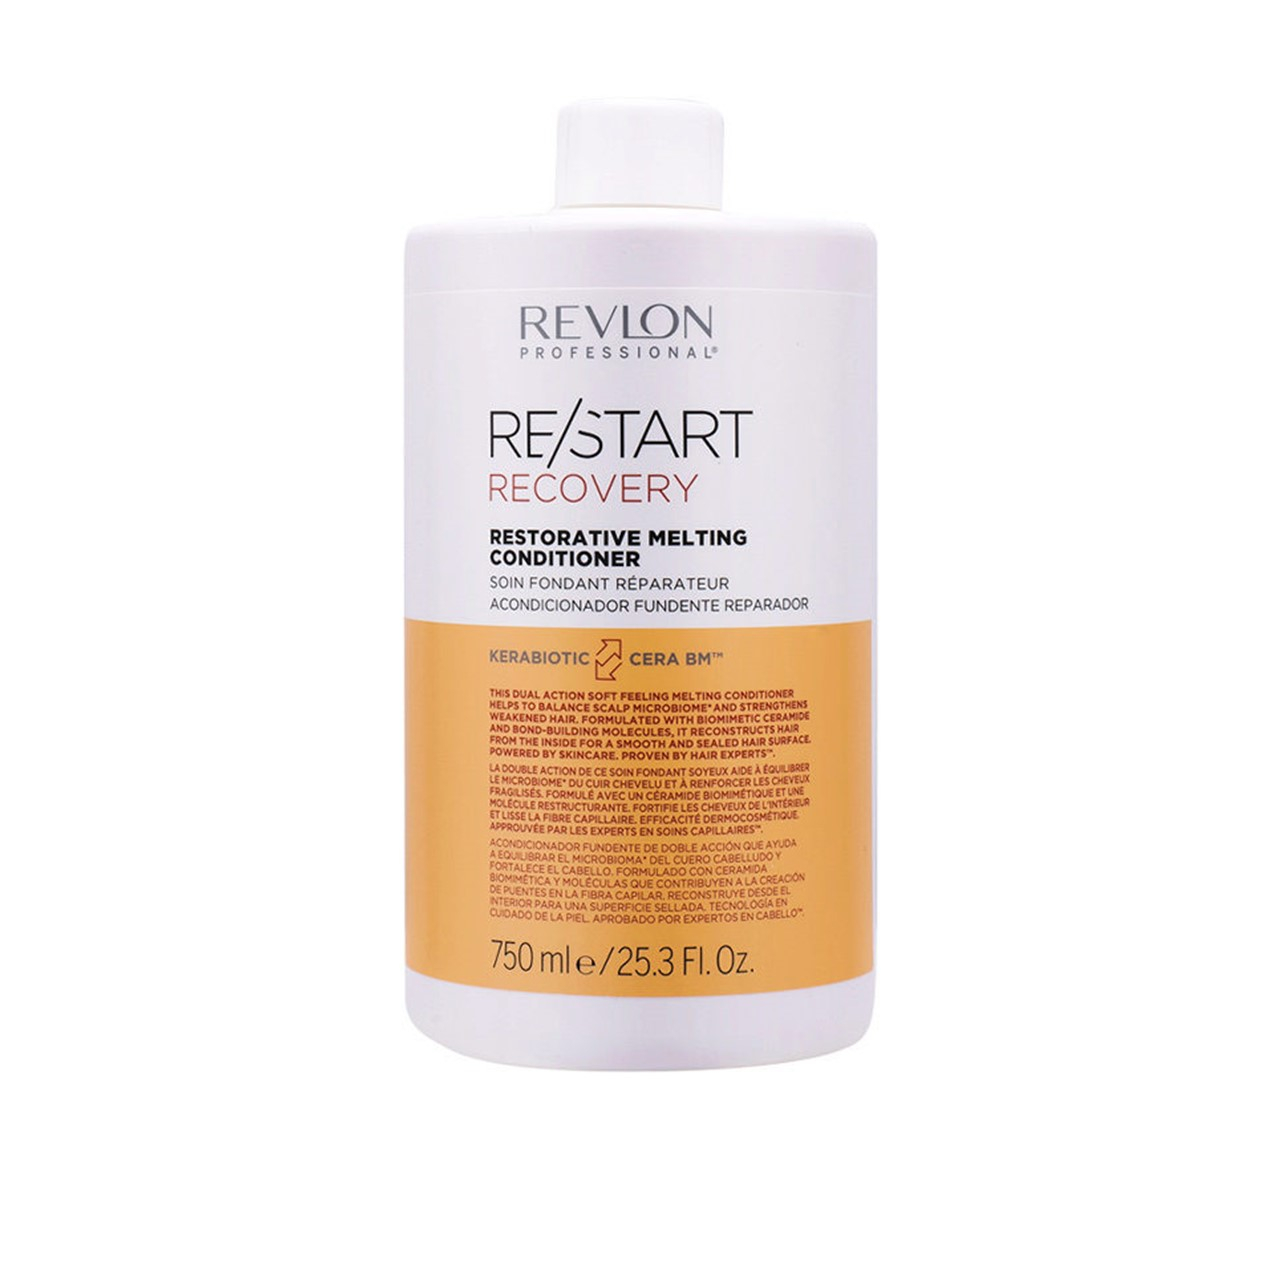 Revlon Recovery Professional USA Restorative 750ml · Conditioner Buy (25.36fl oz) Re/Start